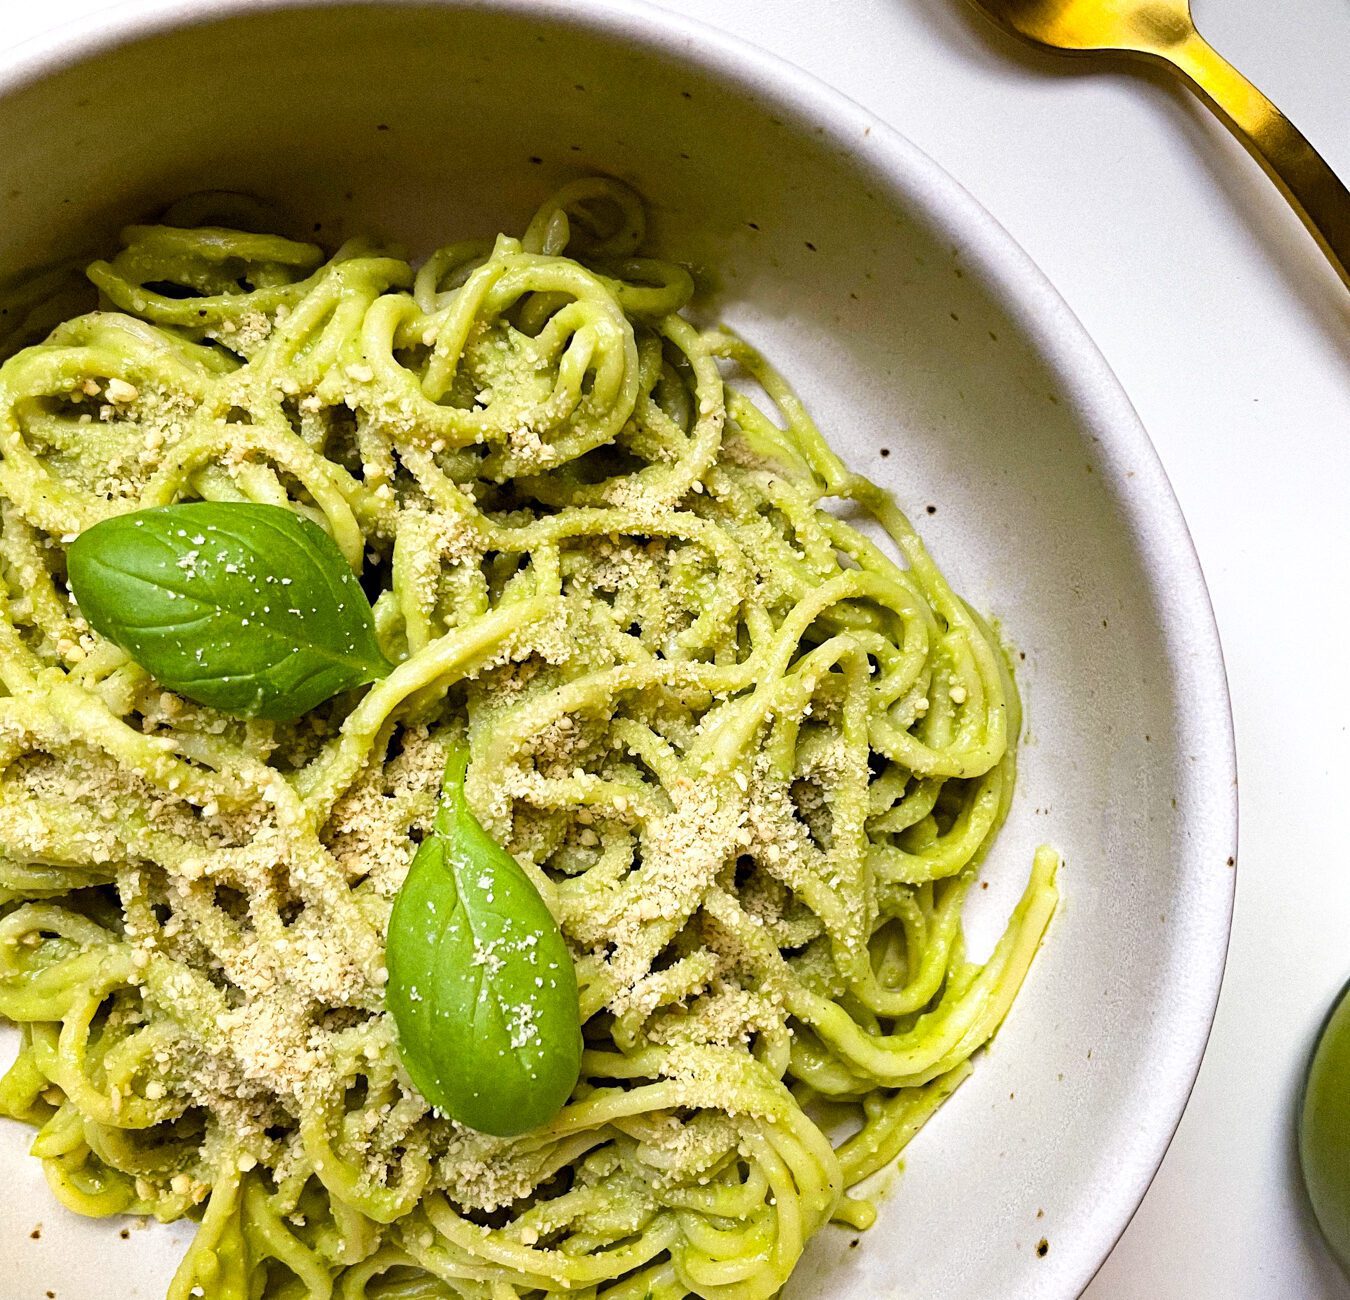 Spaghetti mit grünem Pesto aus Avocados, Basilikum und Parmesan - vegan, glutenfrei